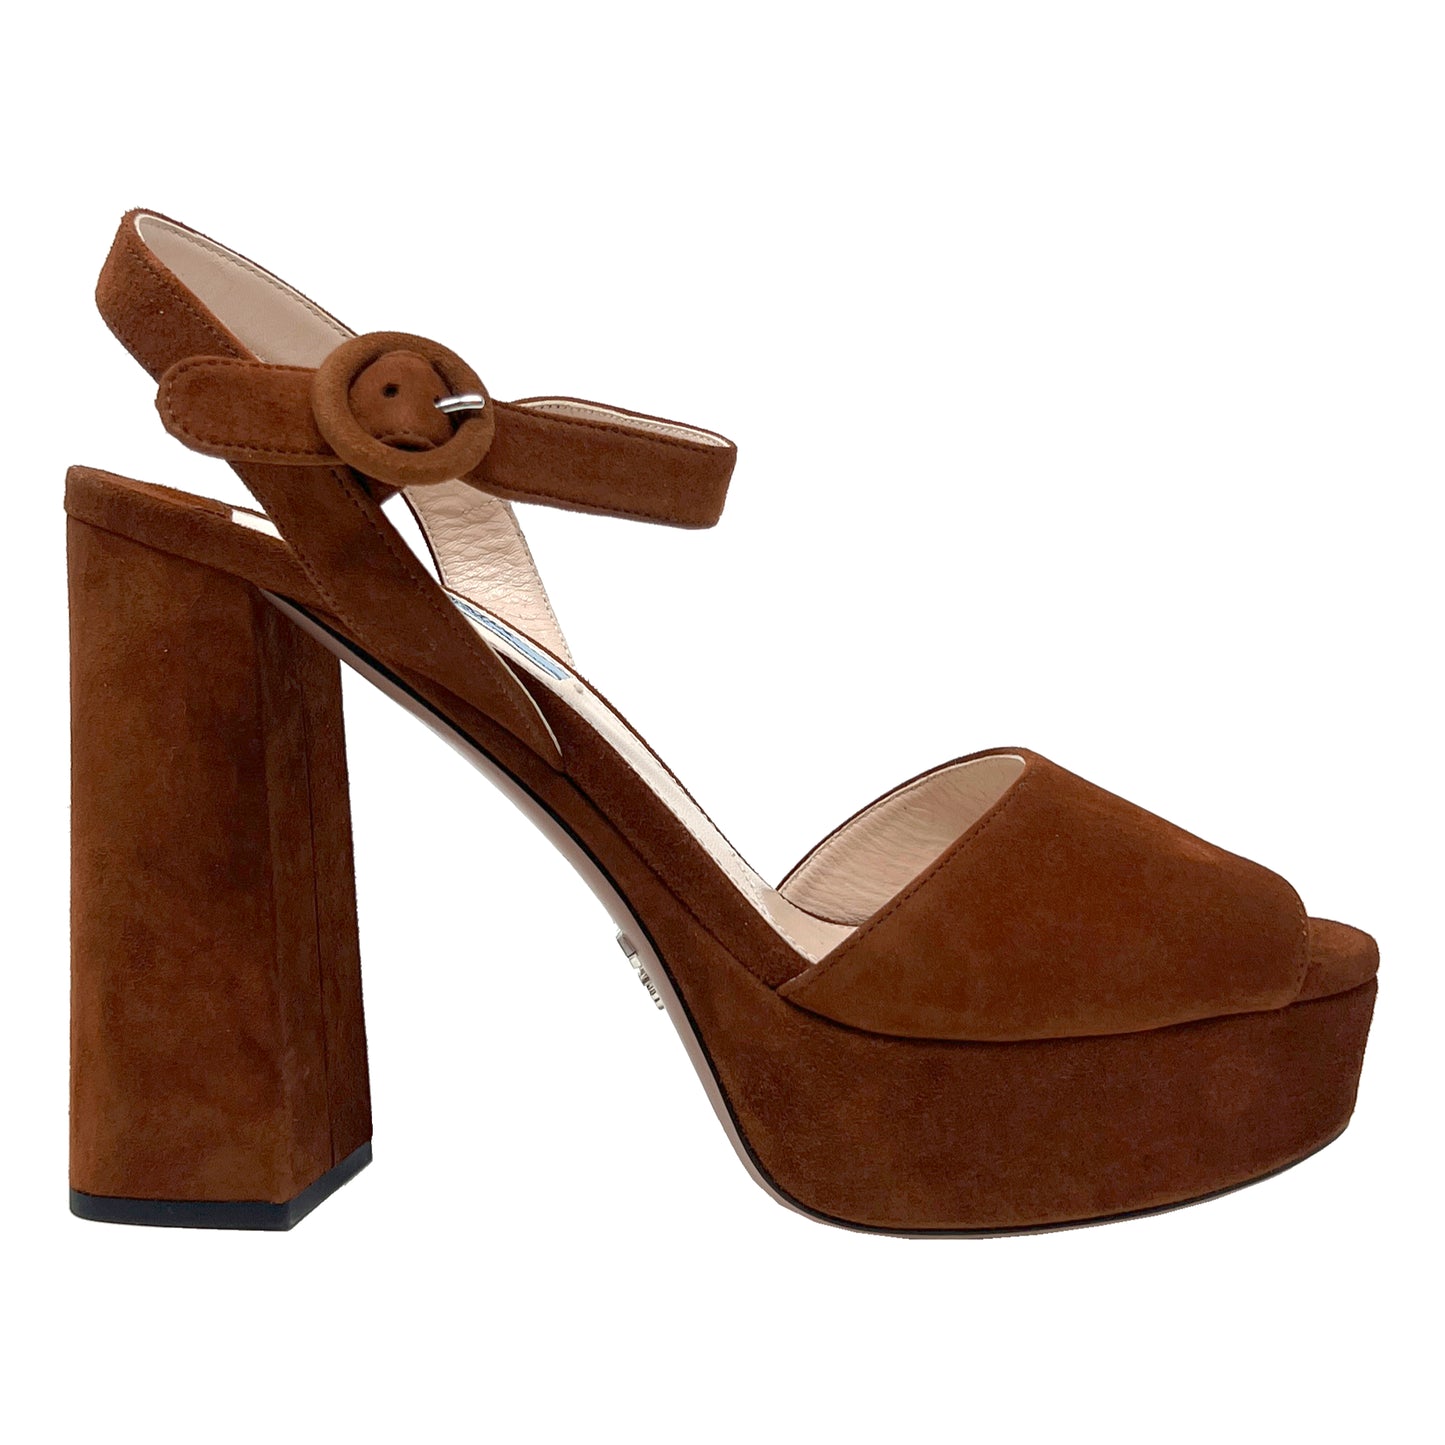 Prada Brown Suede Peep Toe Platform High Heels Ankle Strap Slingback Sandals Size EU 40